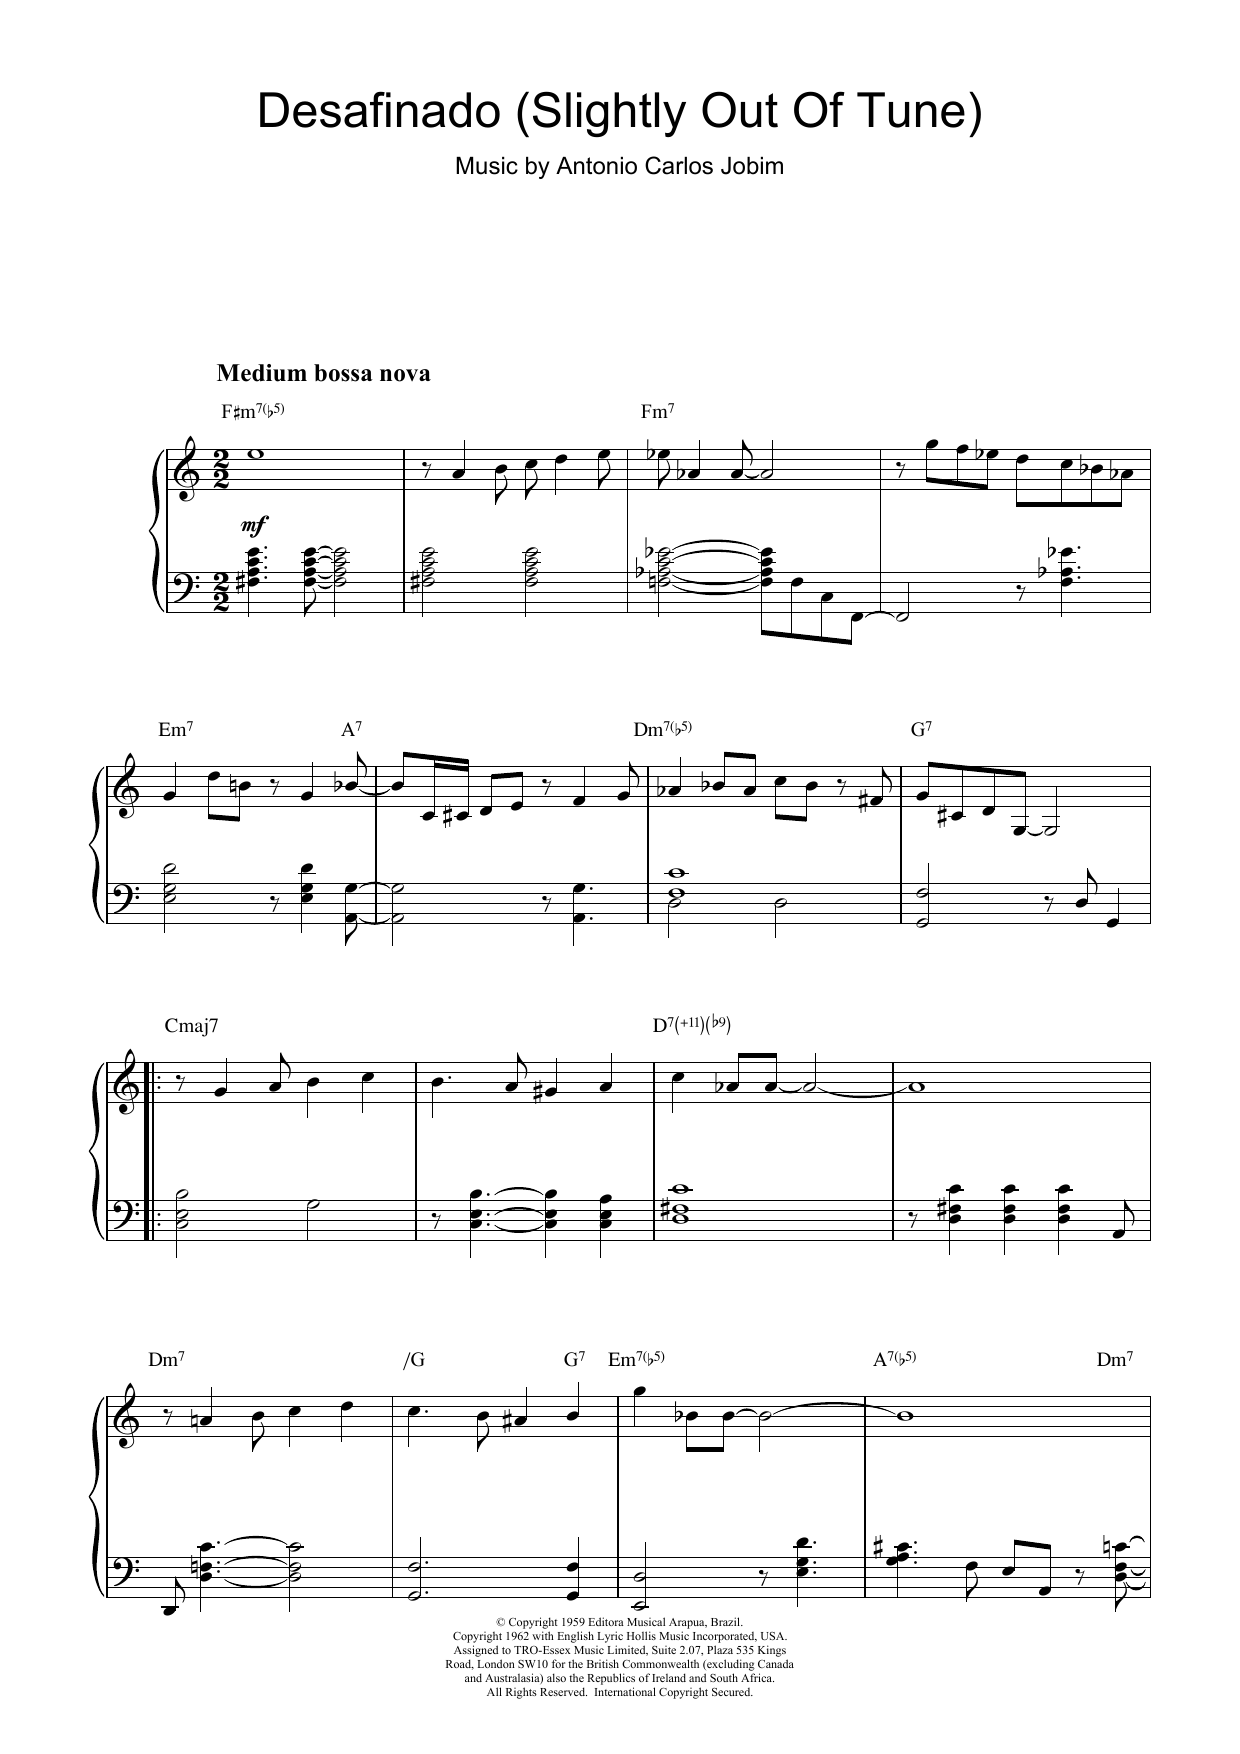 Antonio Carlos Jobim Desafinado (Slightly Out Of Tune) Sheet Music Notes & Chords for Tenor Saxophone - Download or Print PDF